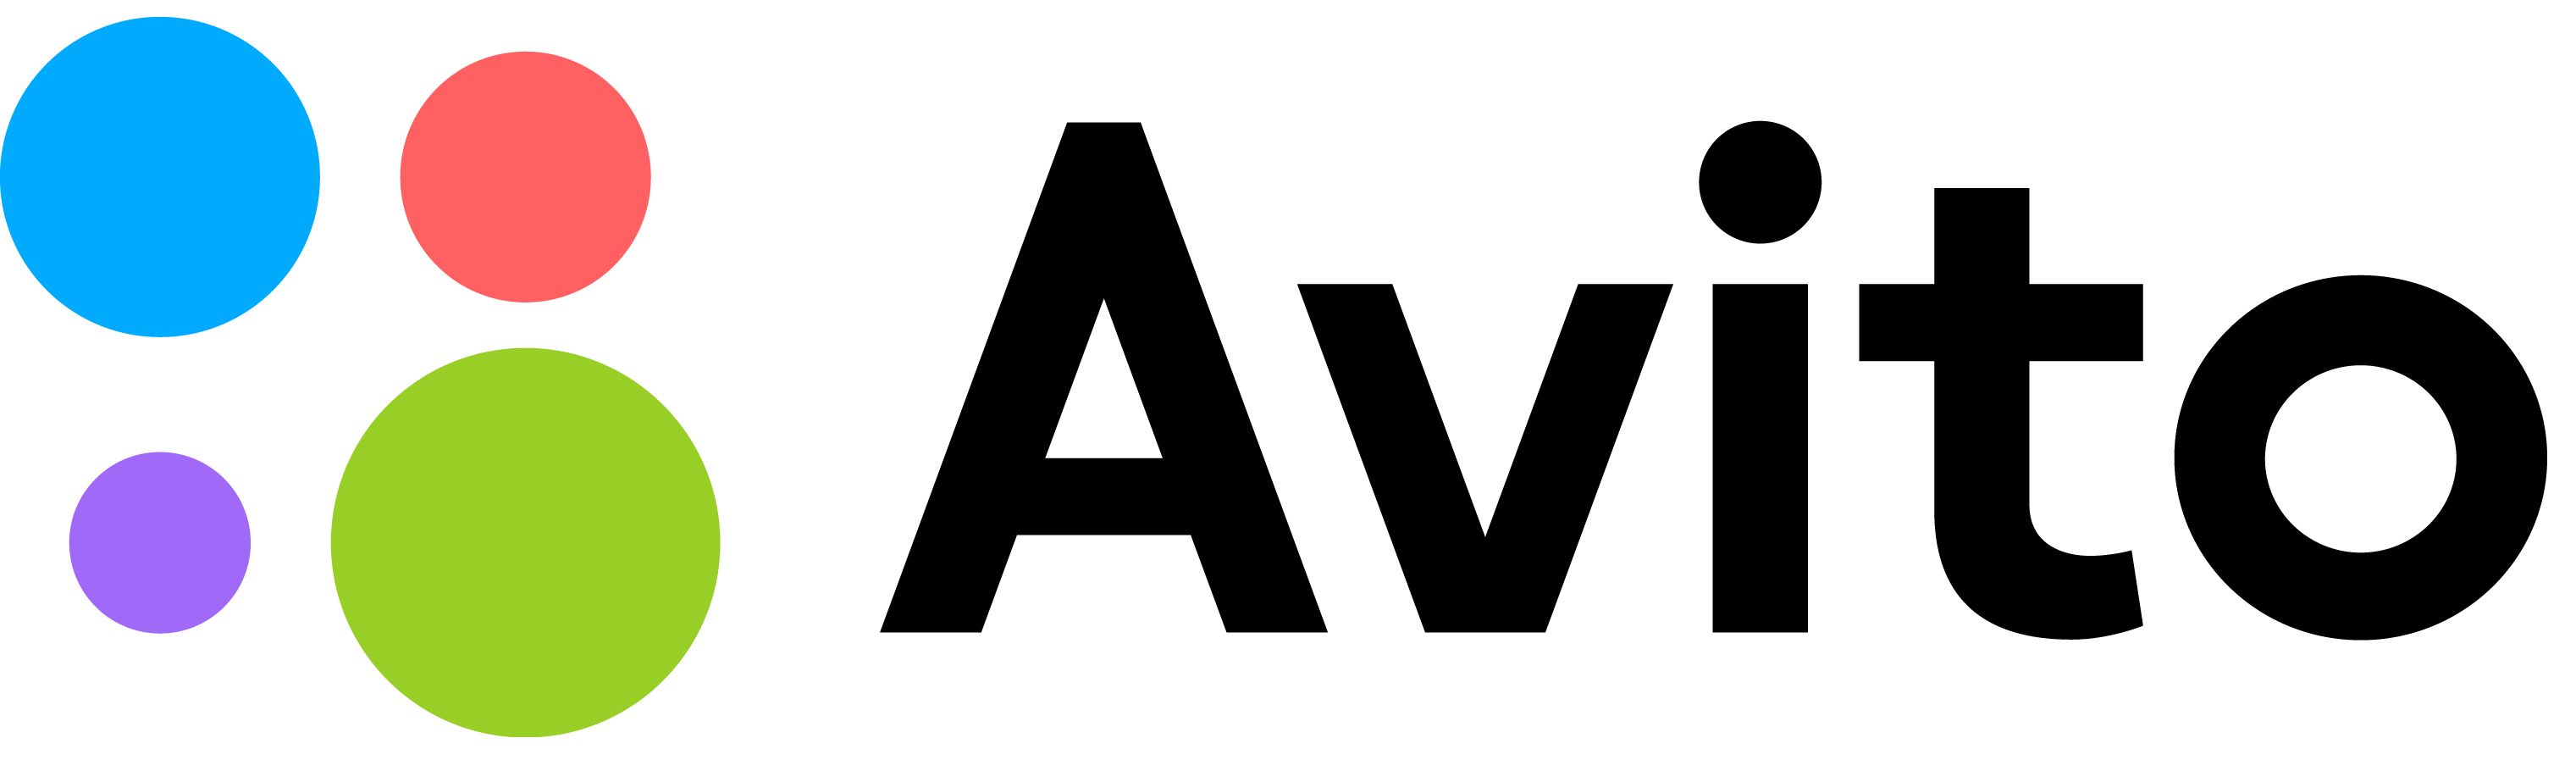 Tanukishop com. Авито логотип. Логотип авито на прозрачном фоне. Авито маркетплейс. Avito значок.